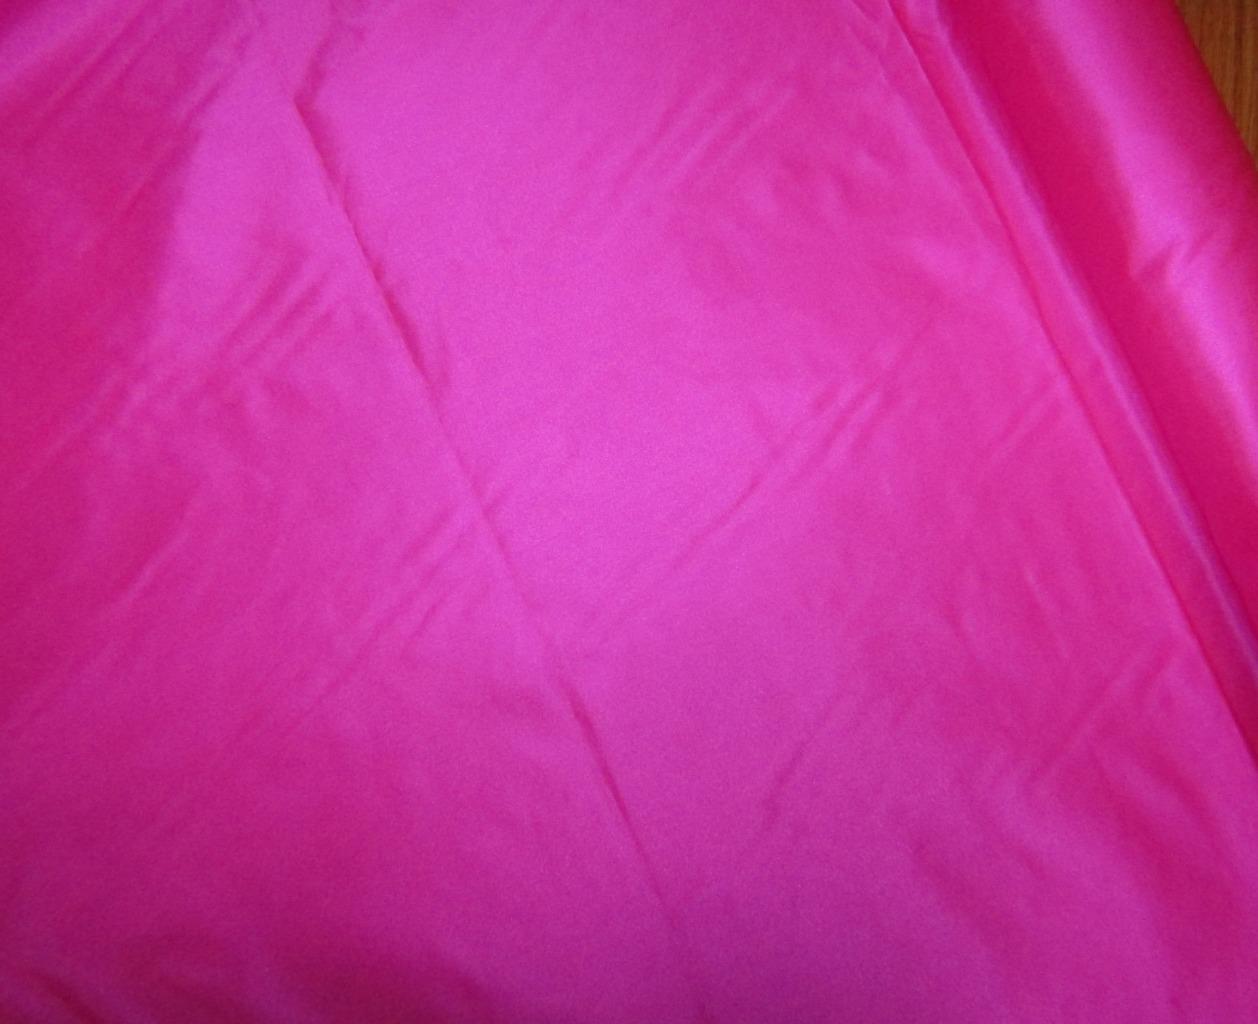 66 momme silk dutchess satin fabric hot pink 54" wide